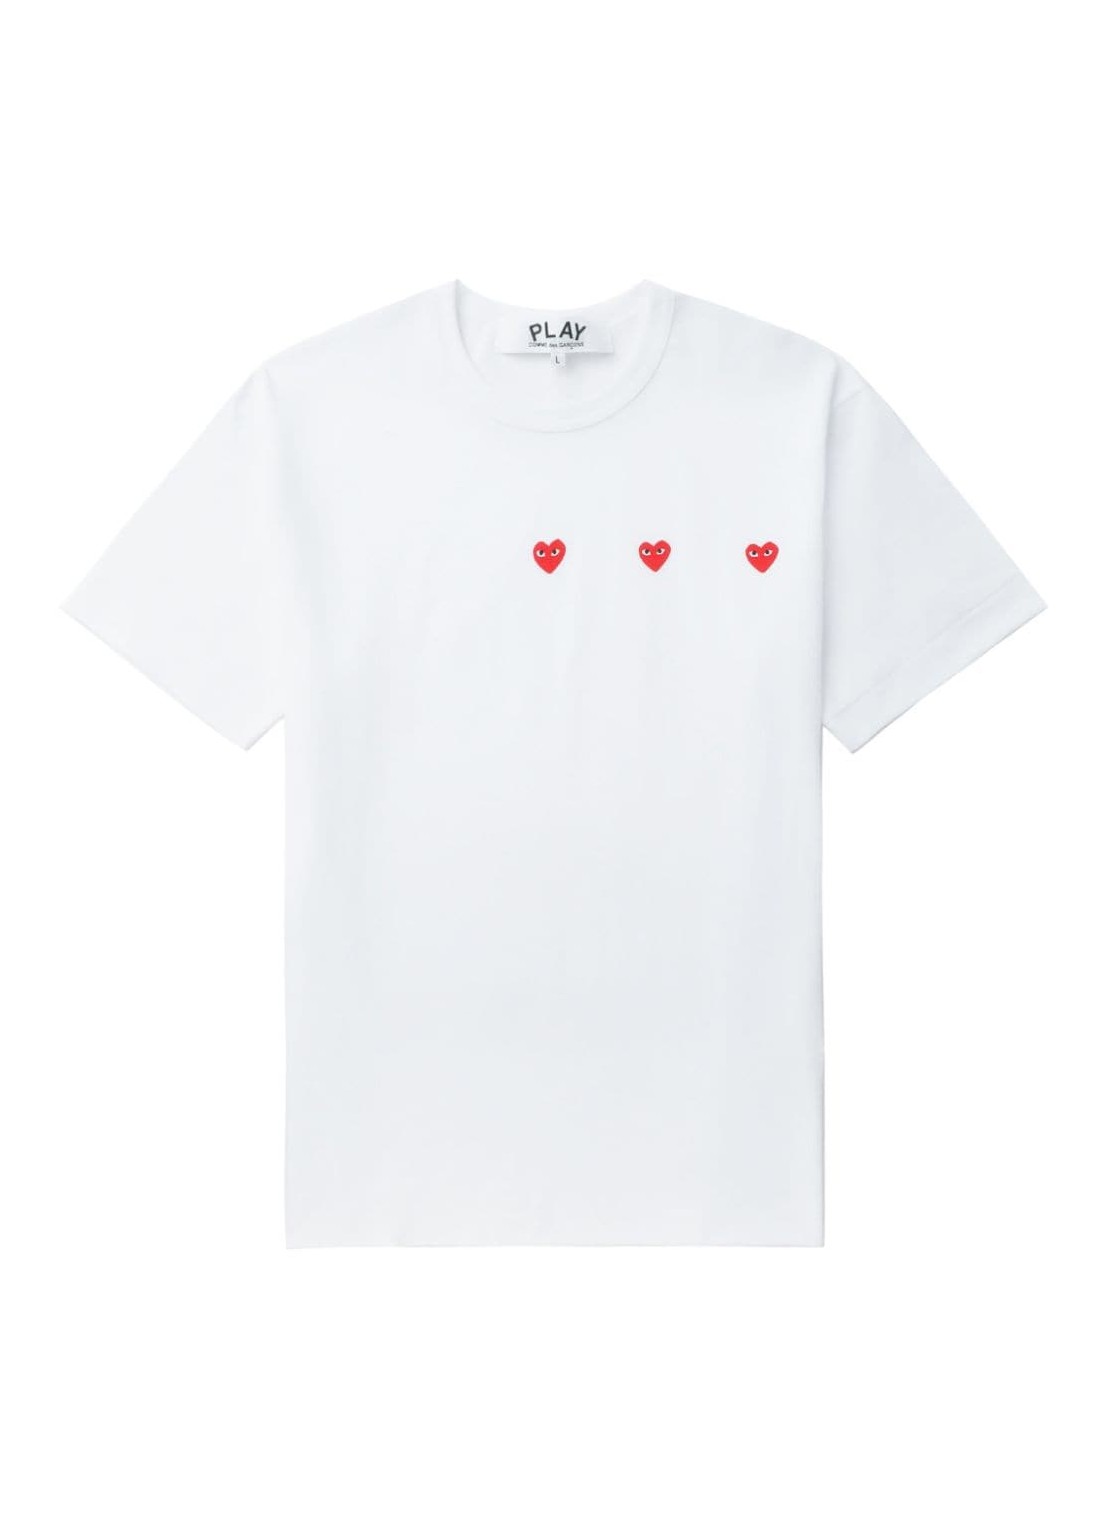 Camiseta comme des garcons t-shirt manhorizontal 3 heart short sleeve t-shirt - axt337051 white tall